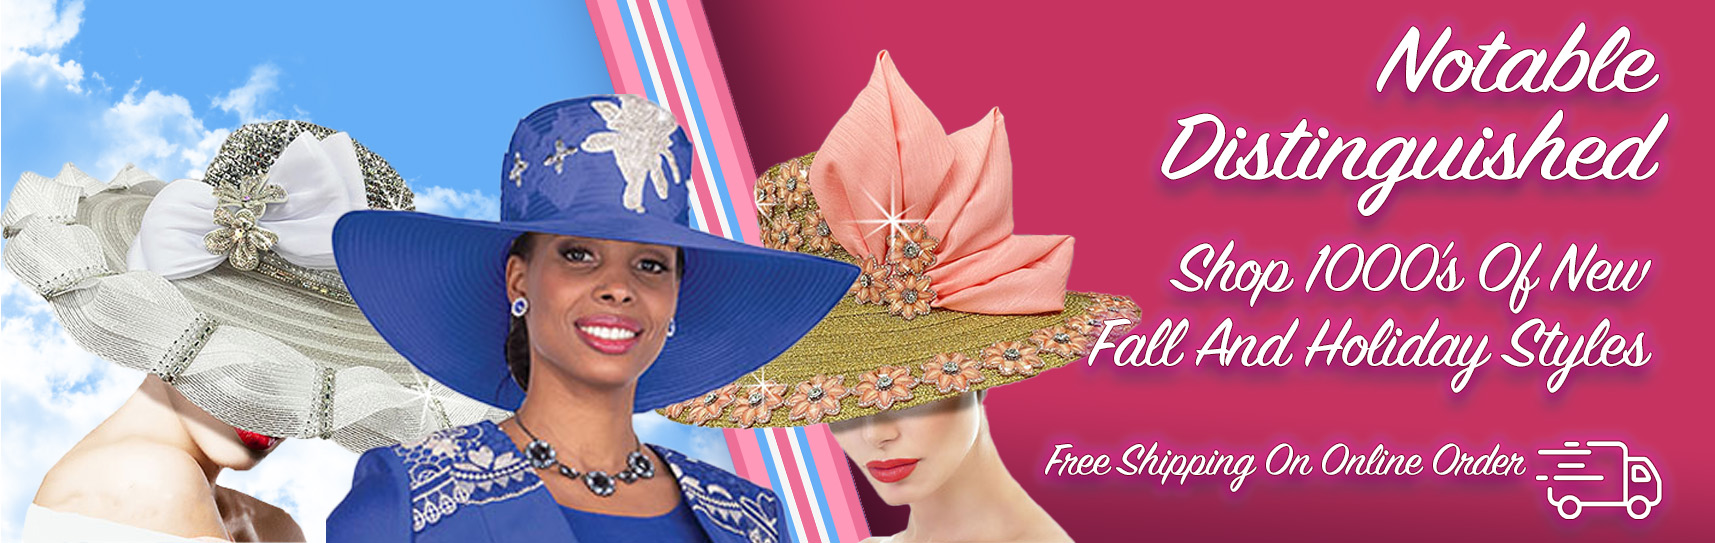 Church Hats for Women & Fancy Sunday Fashion